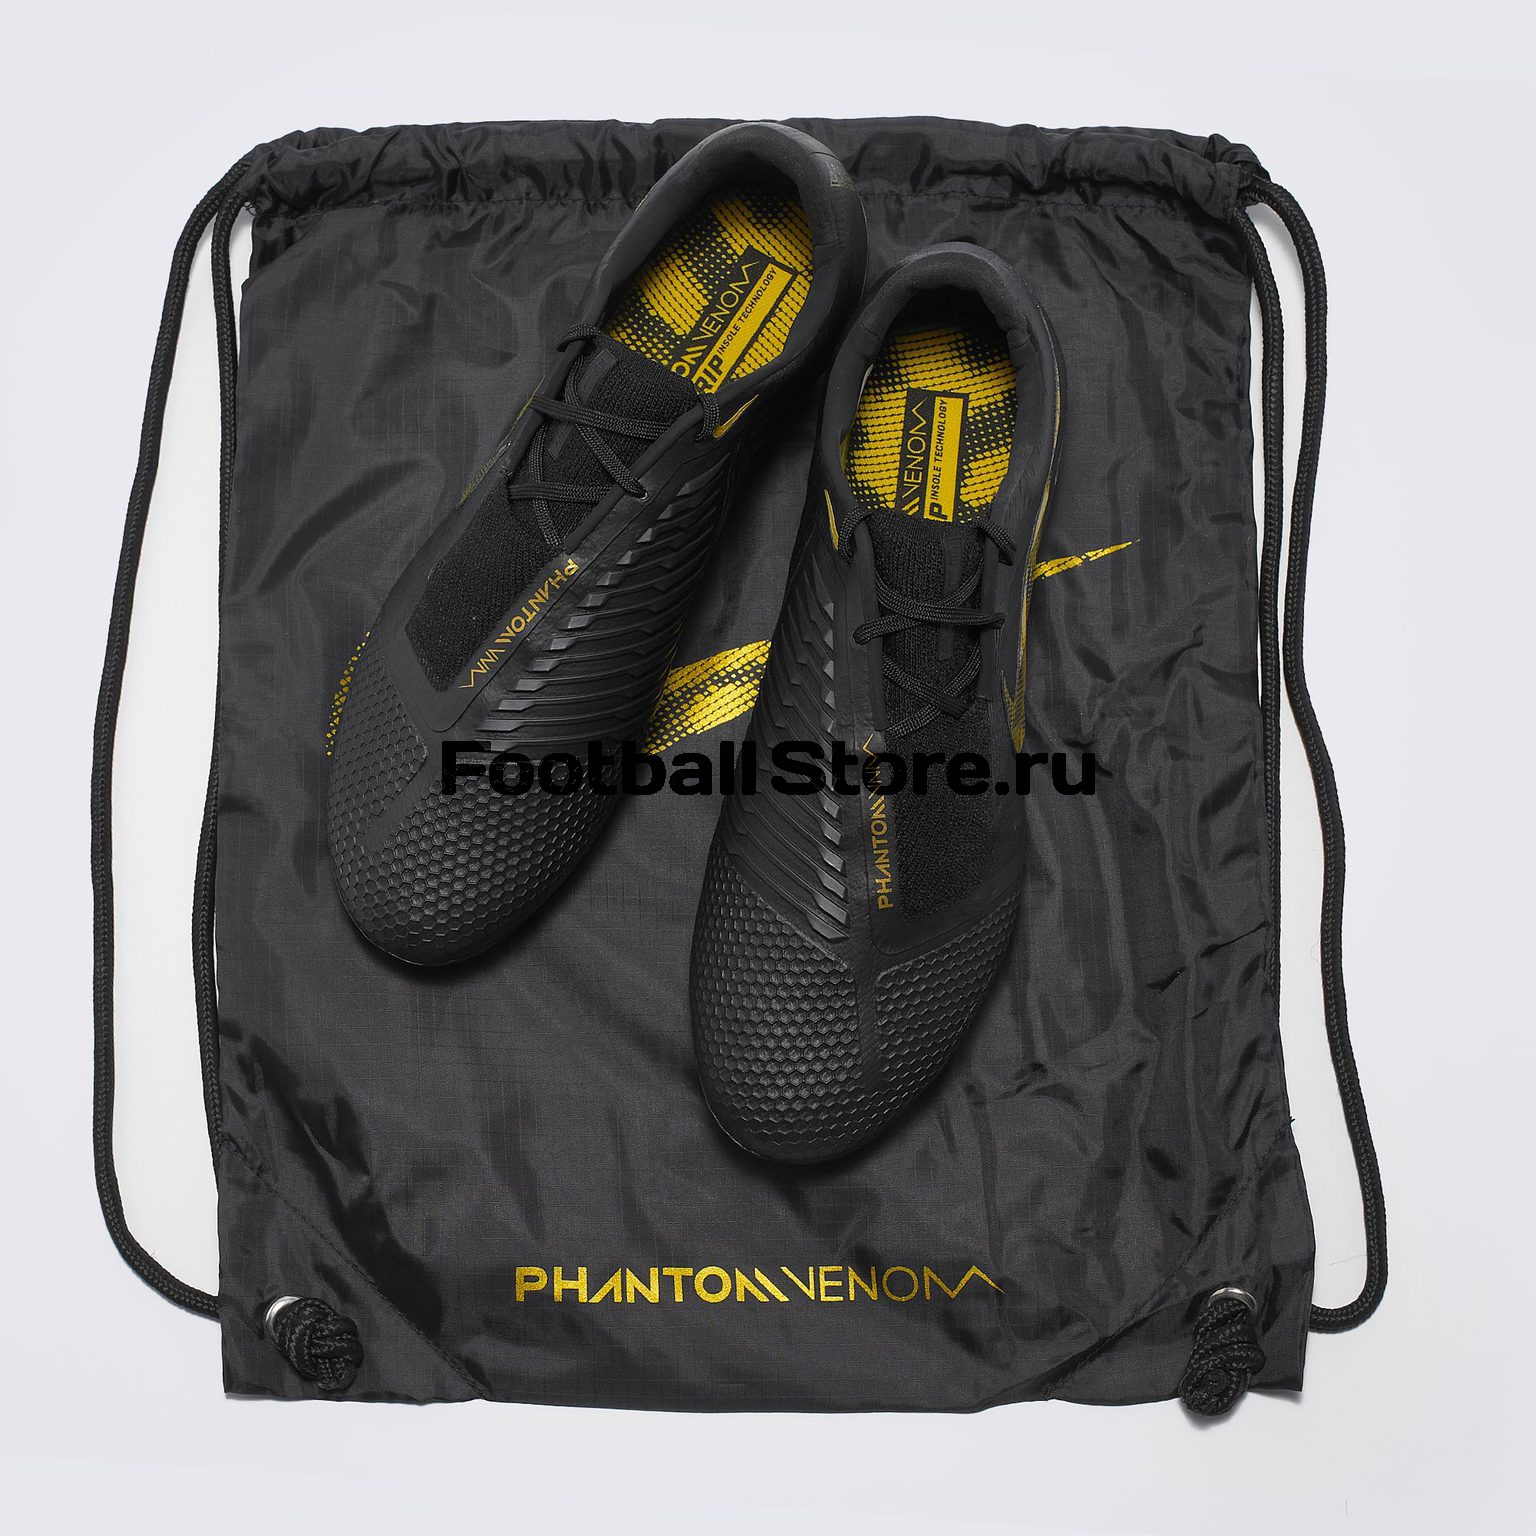 Бутсы Nike Phantom Venom Elite AG-Pro AO0576-077